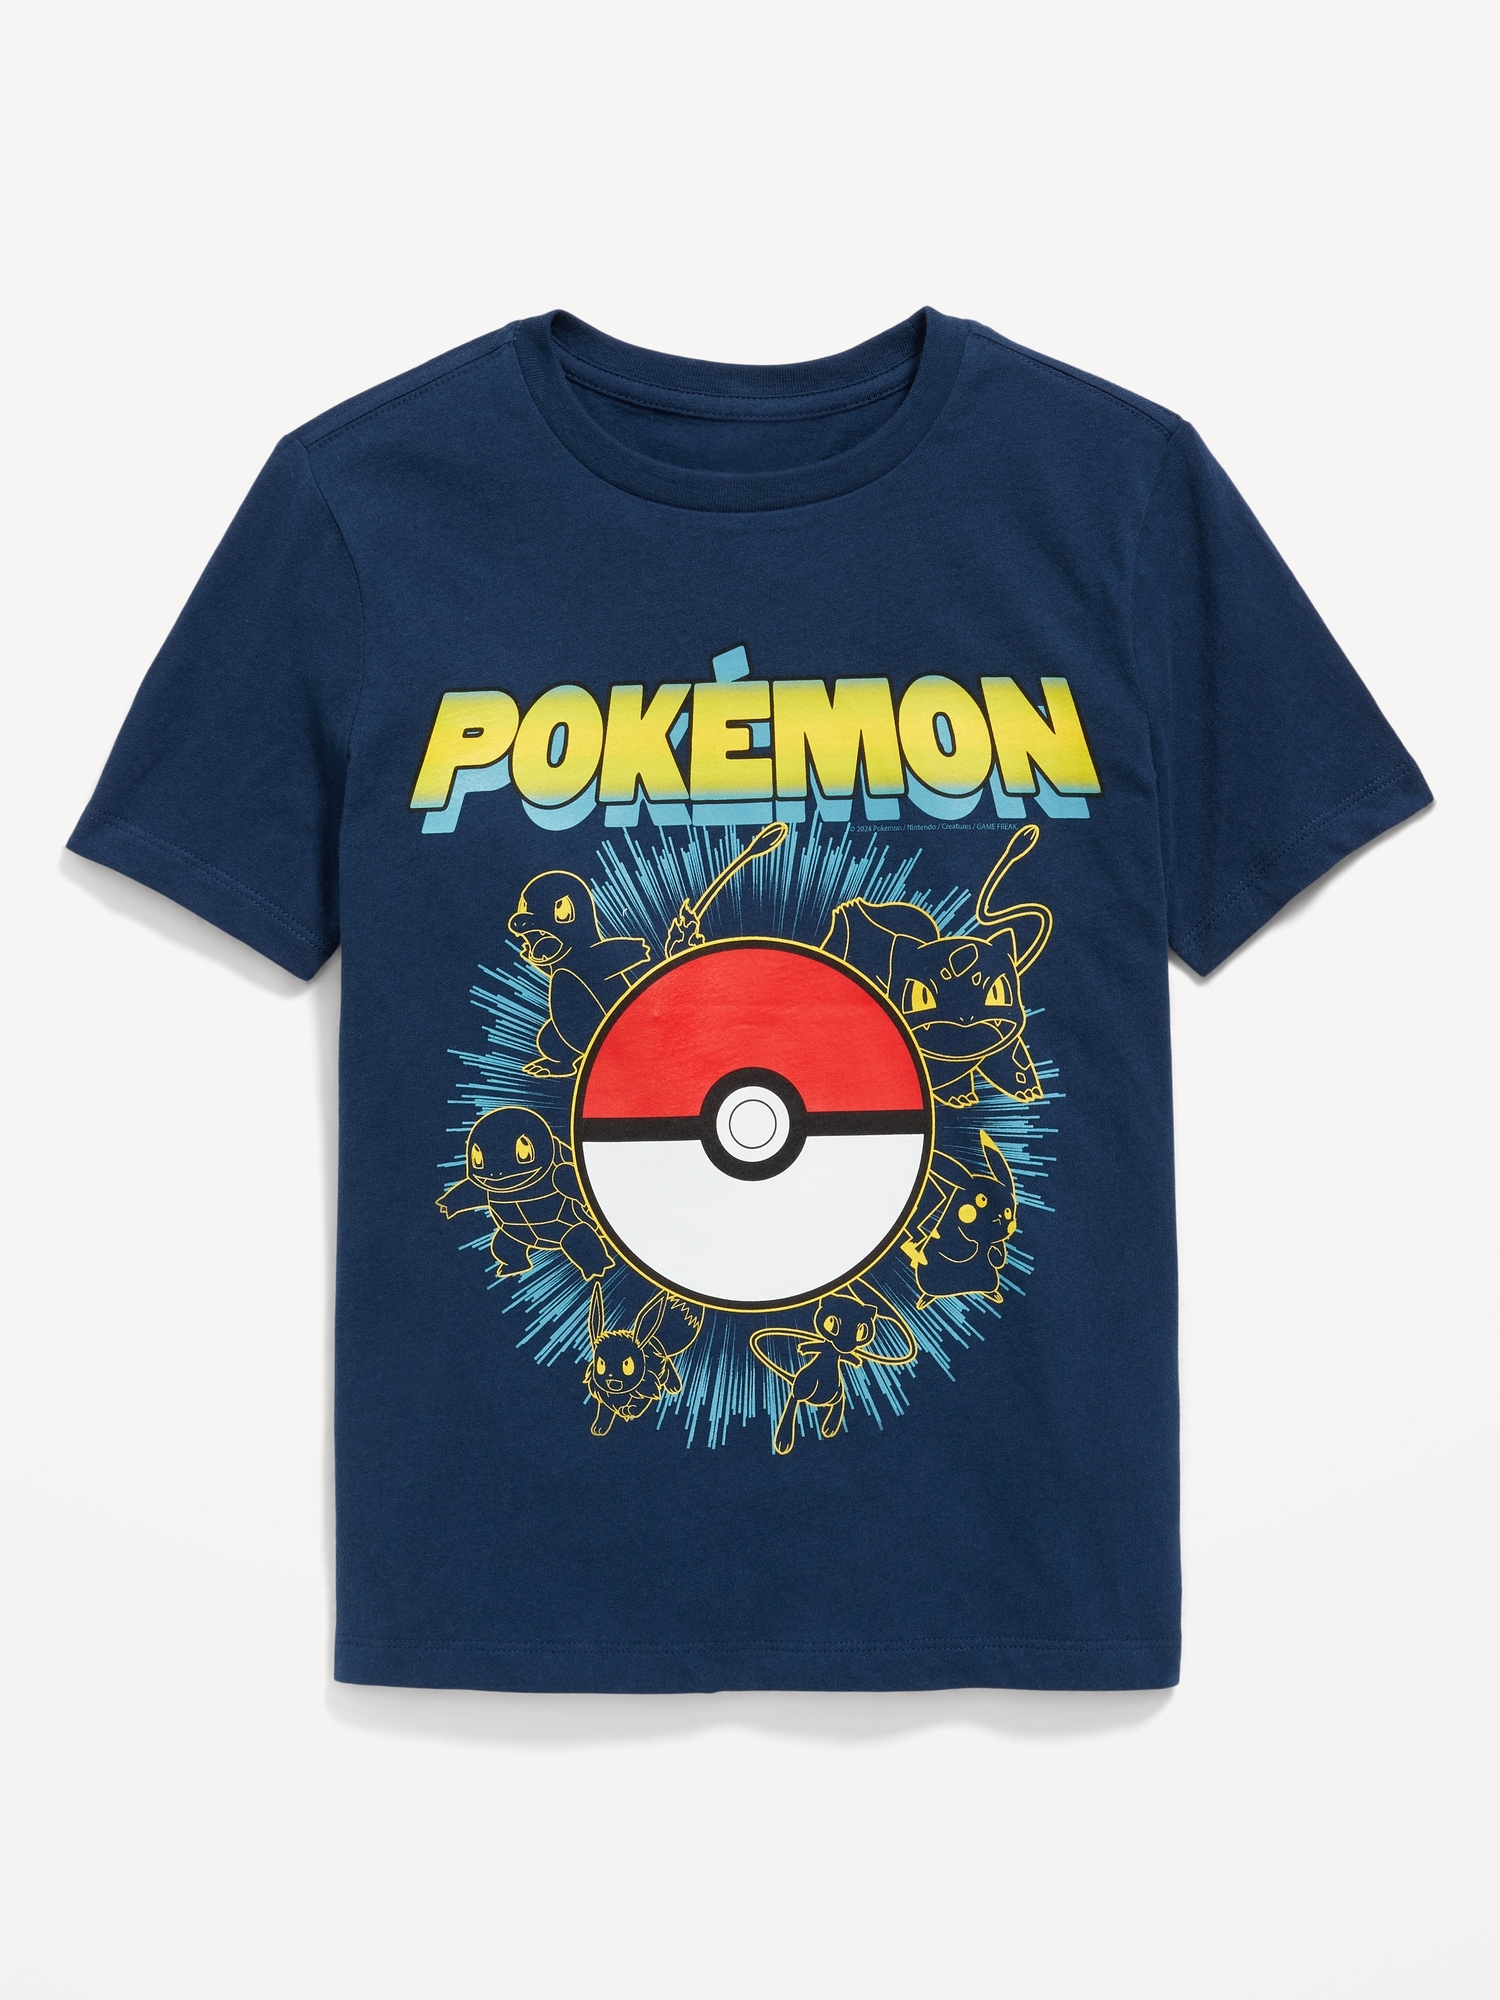 Pokémon™ Gender-Neutral Graphic T-Shirt for Kids